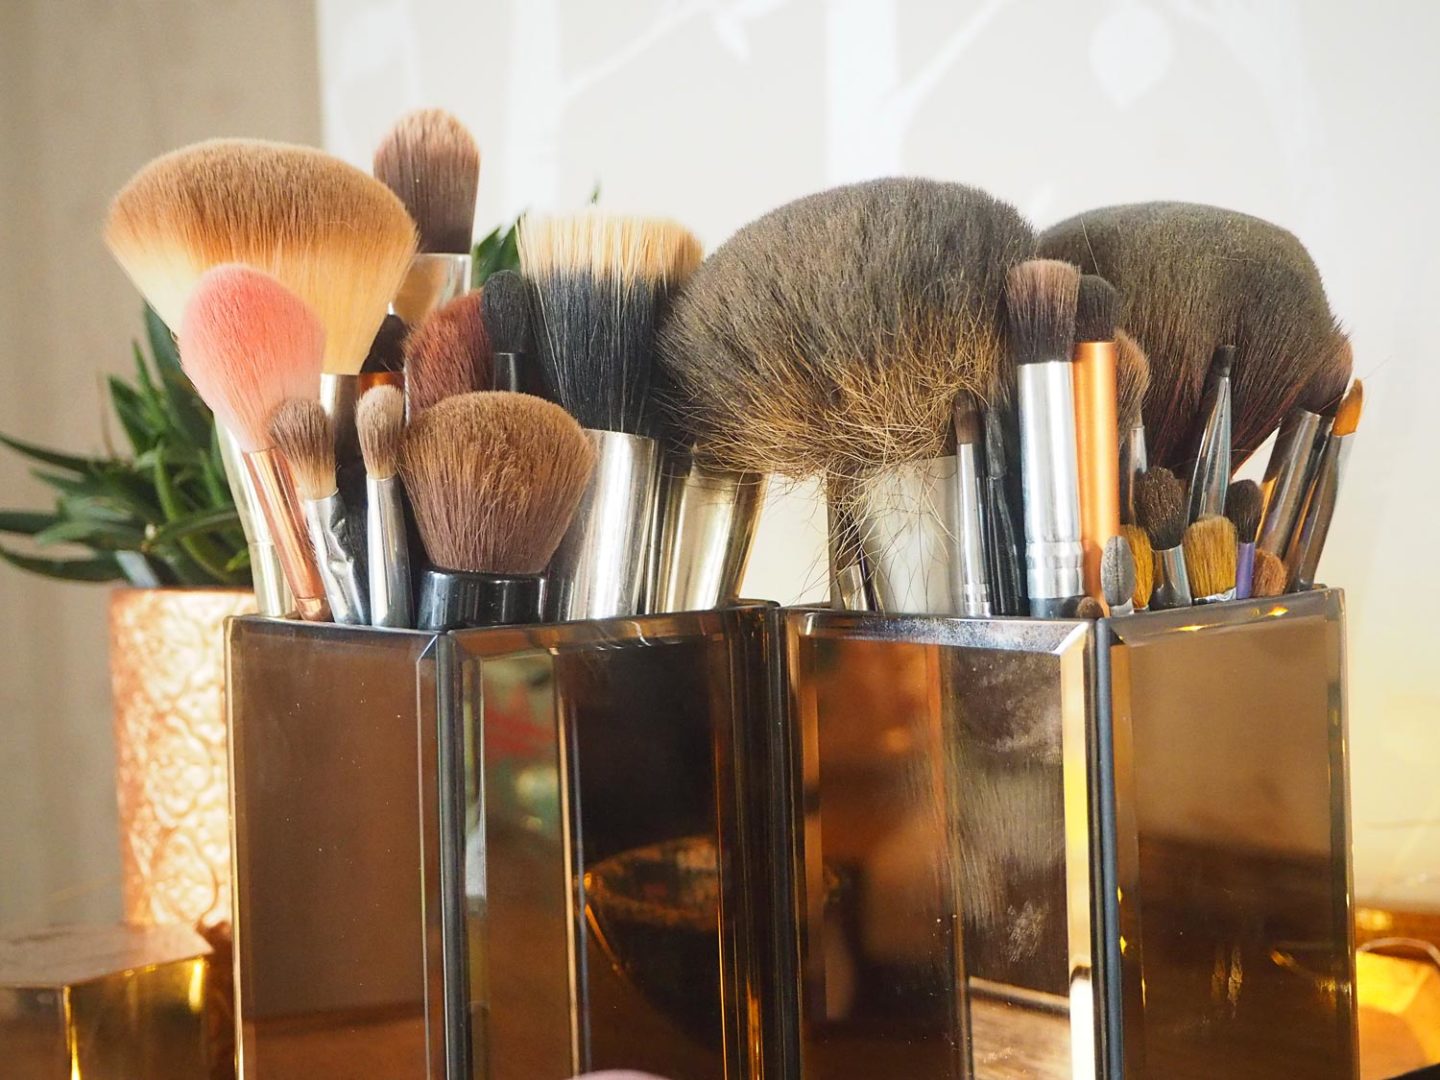 Makeup Brush Collection